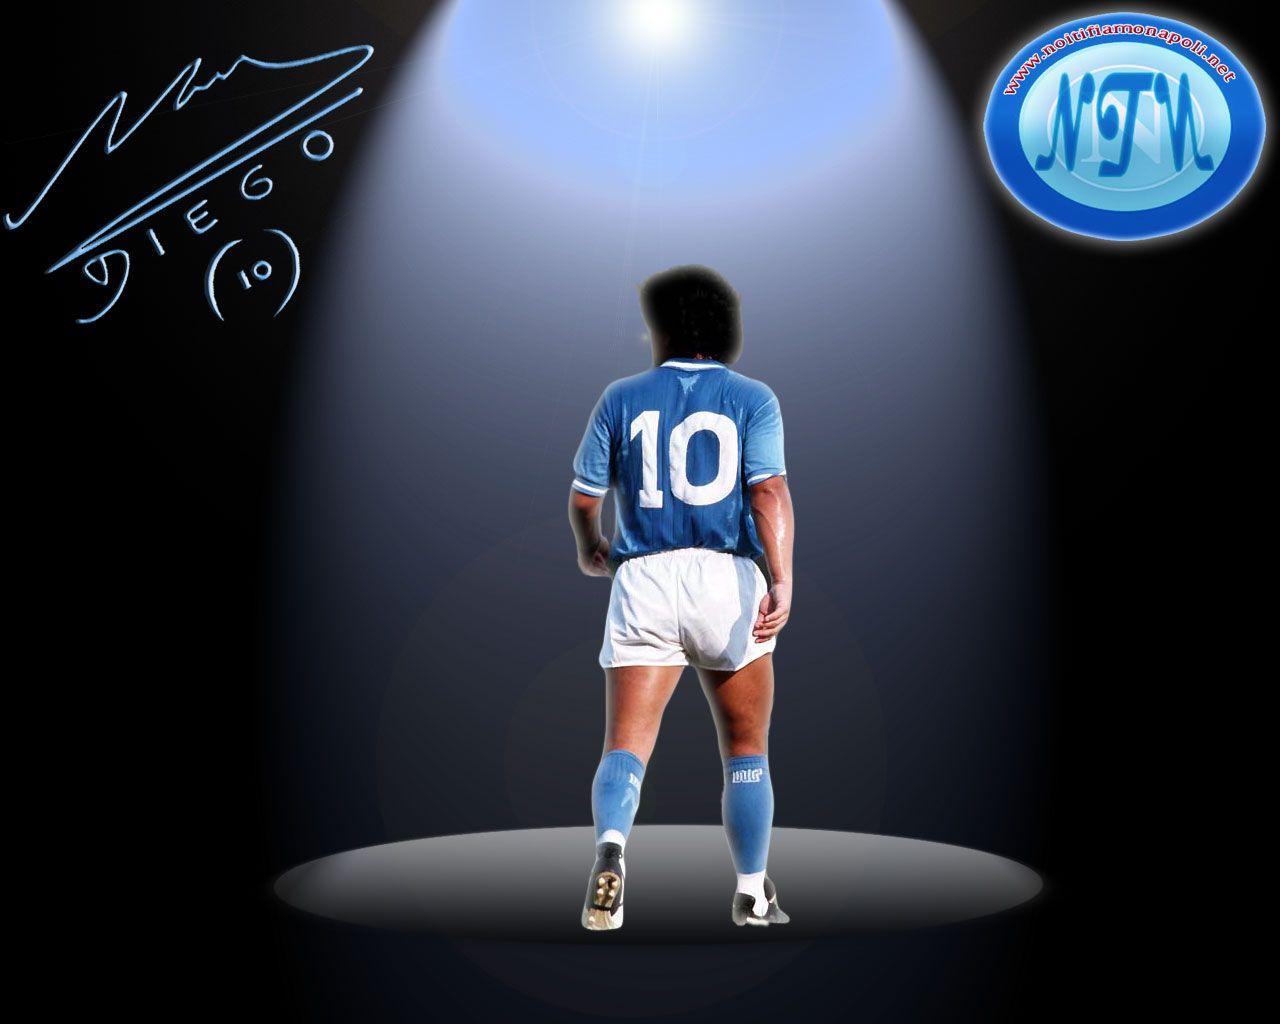 World Cup: SSC Napoli Logo Wallpaper